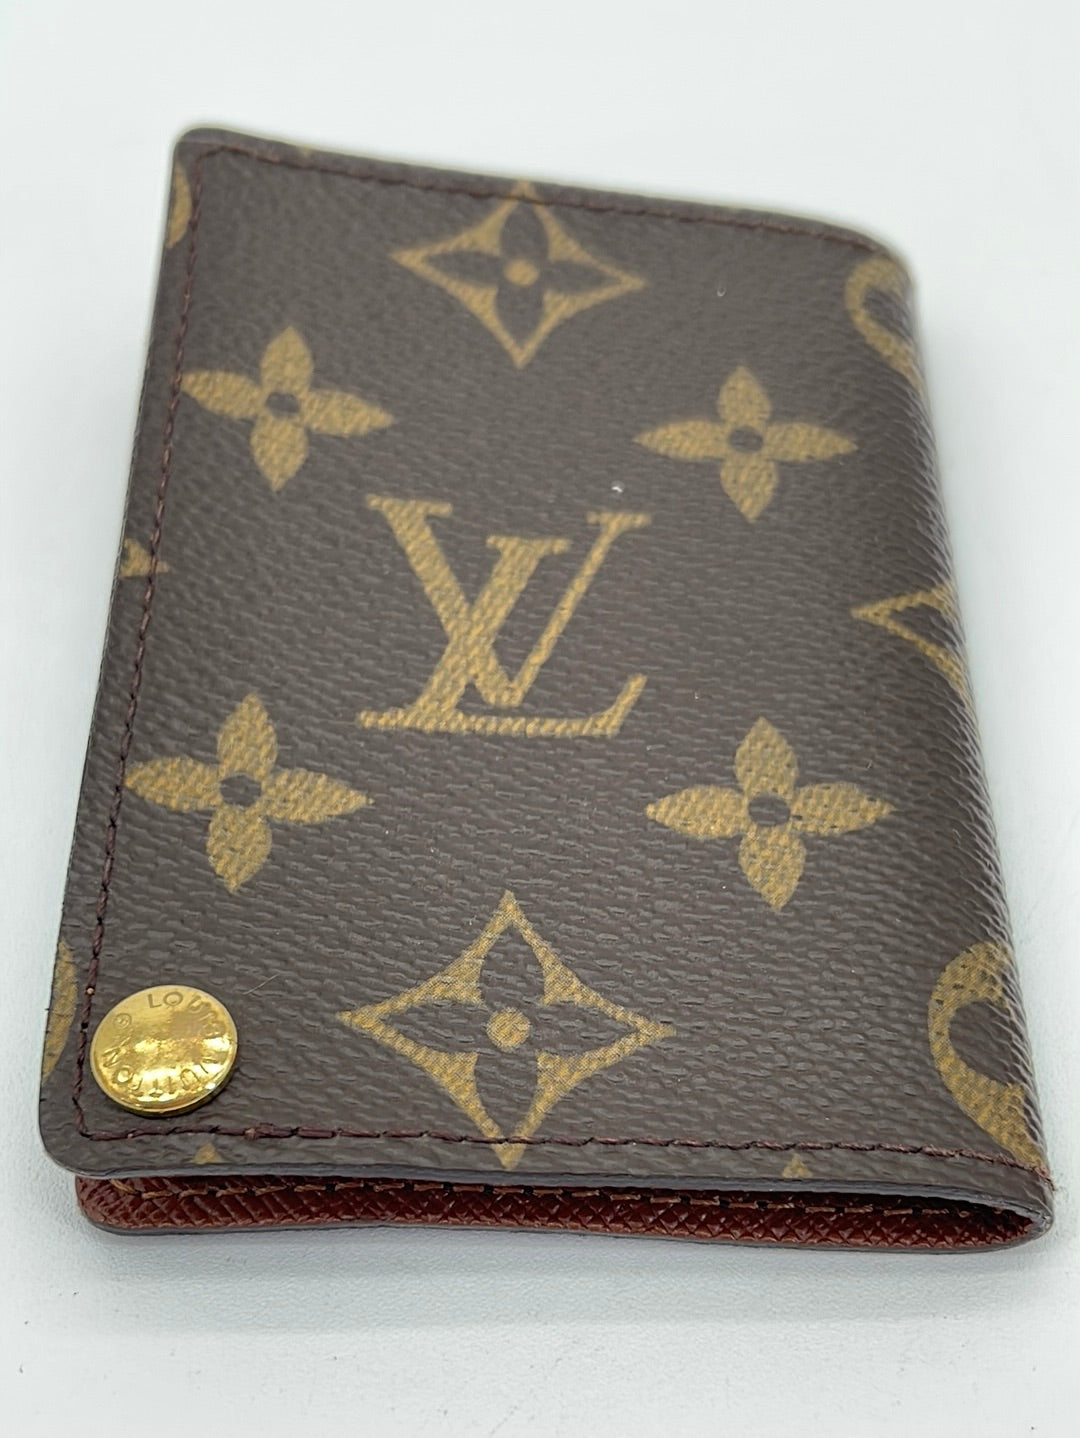 Louis Vuitton Monogram Porte cards Credit Pression Card Holder